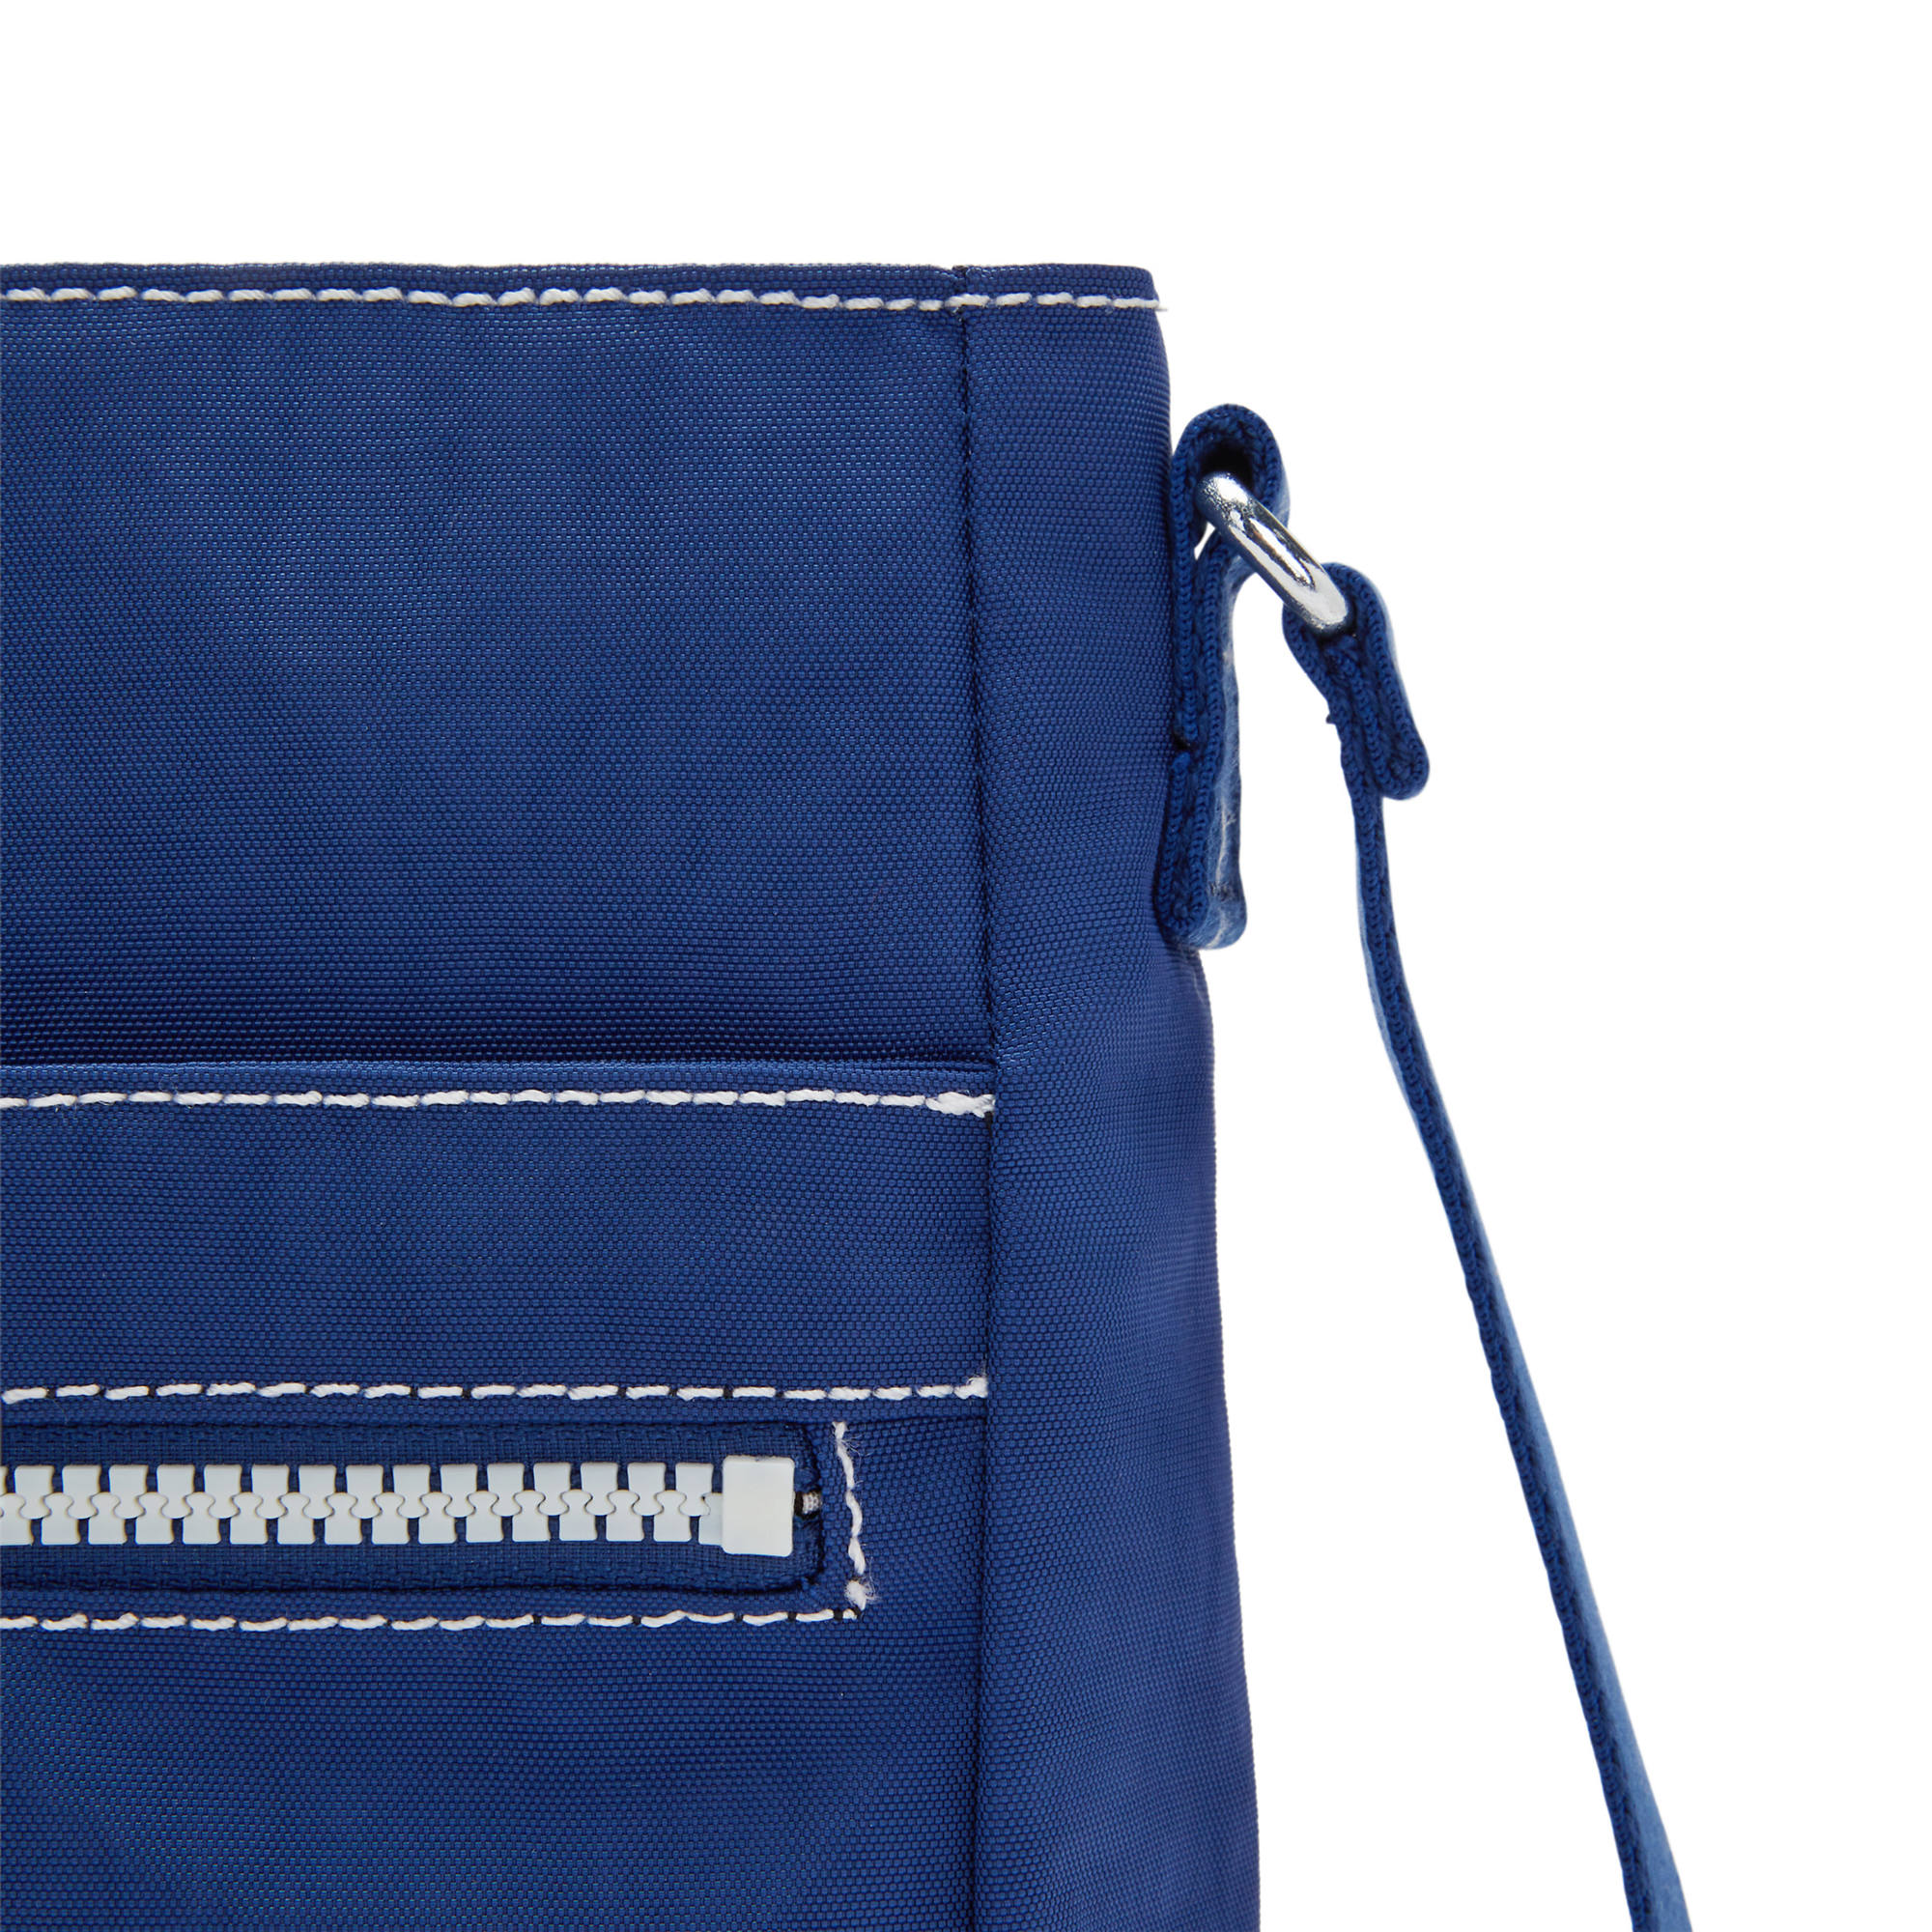 Kipling Women's New Angie Crossbody Handbag with Adjustable Strap | eBay